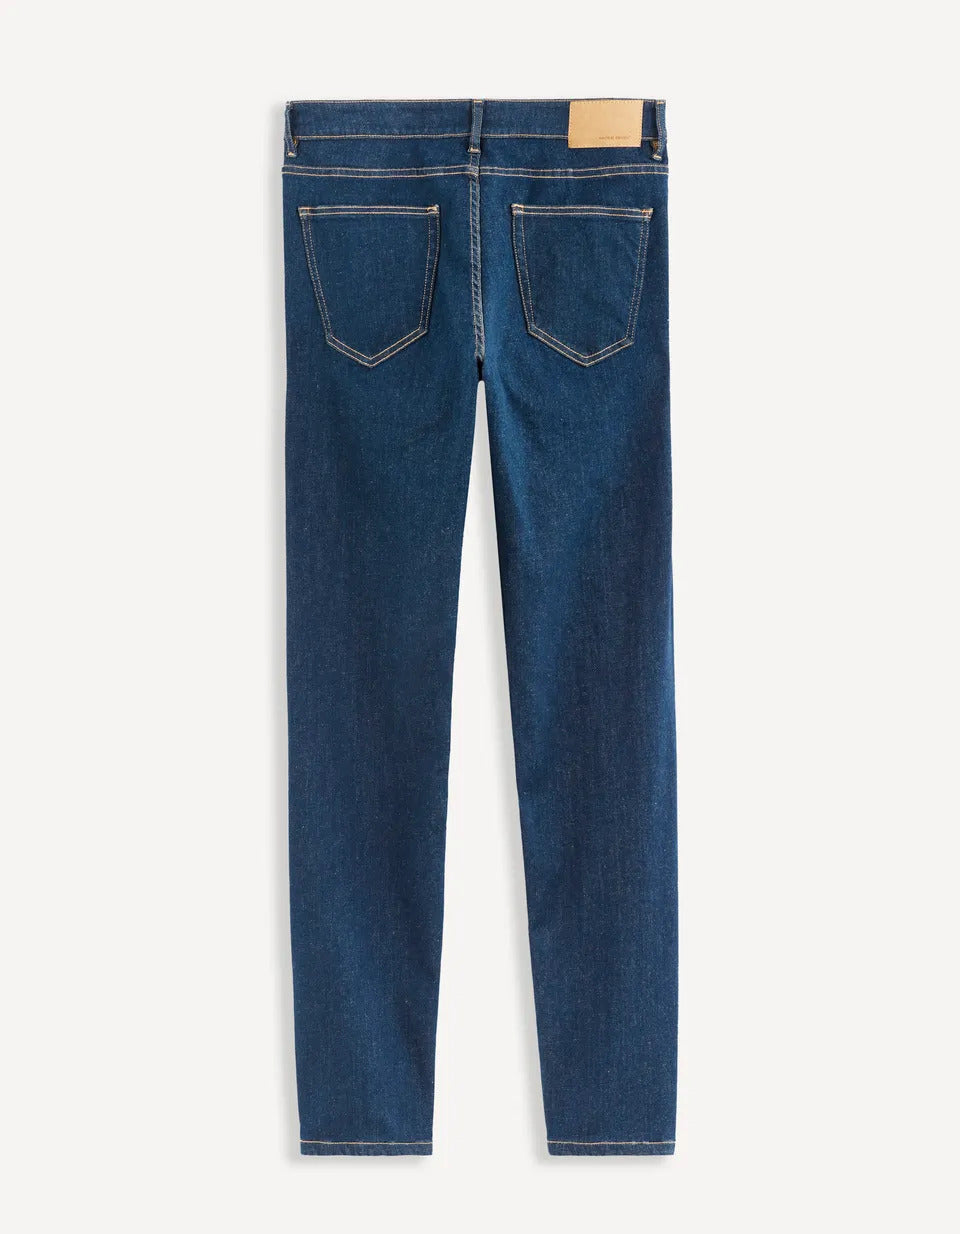 Blue Standard Fit Jeans